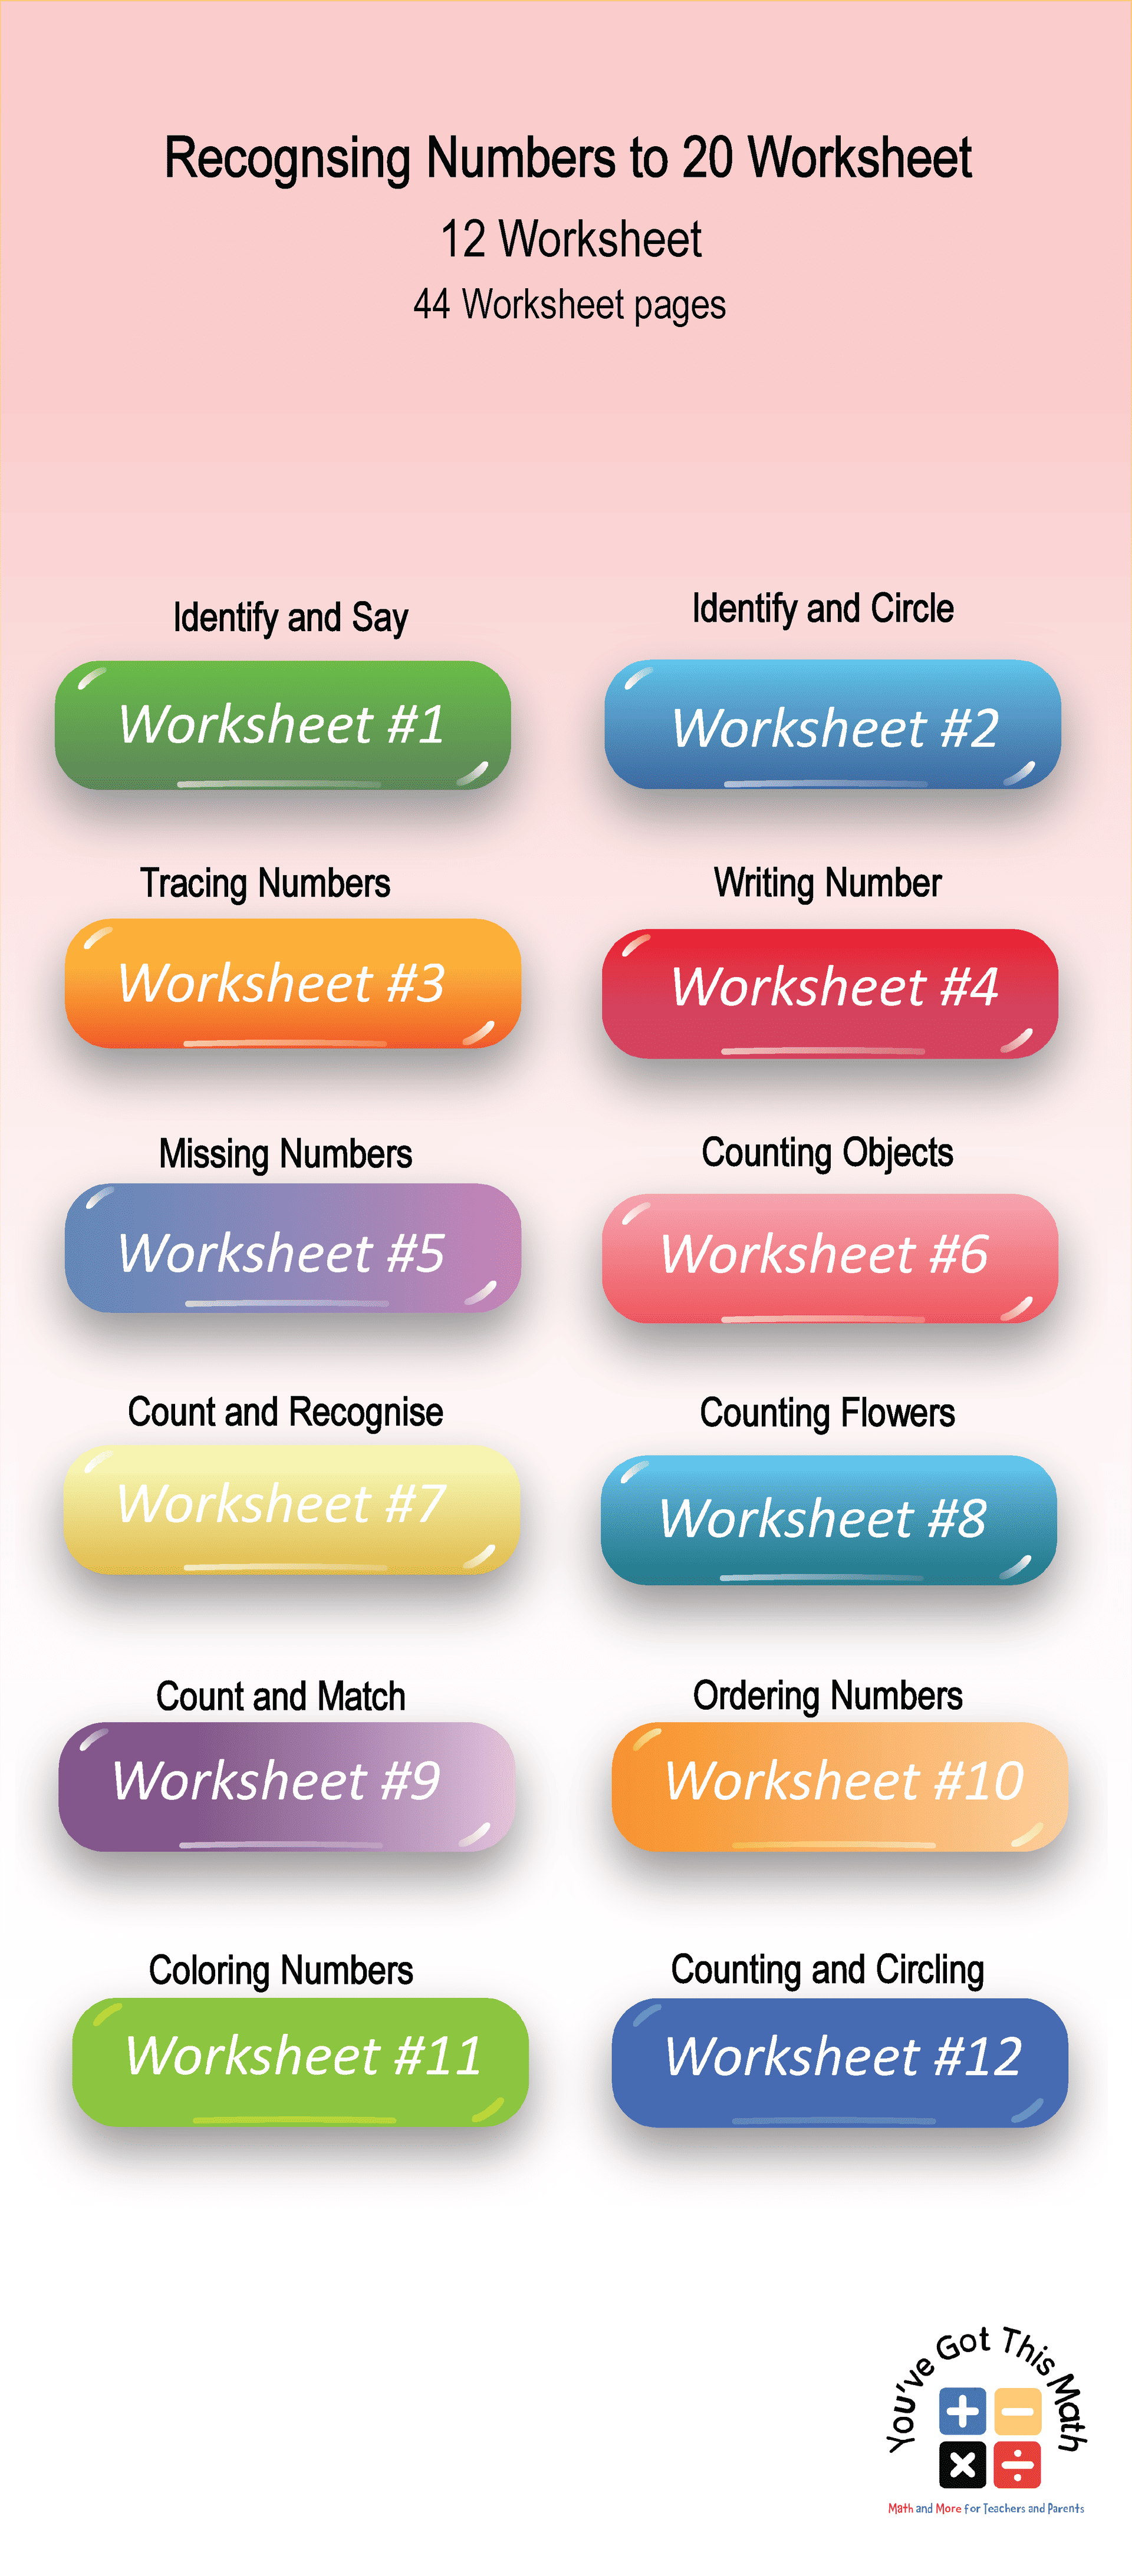 Recognsing Numbers to 20 Worksheet box image